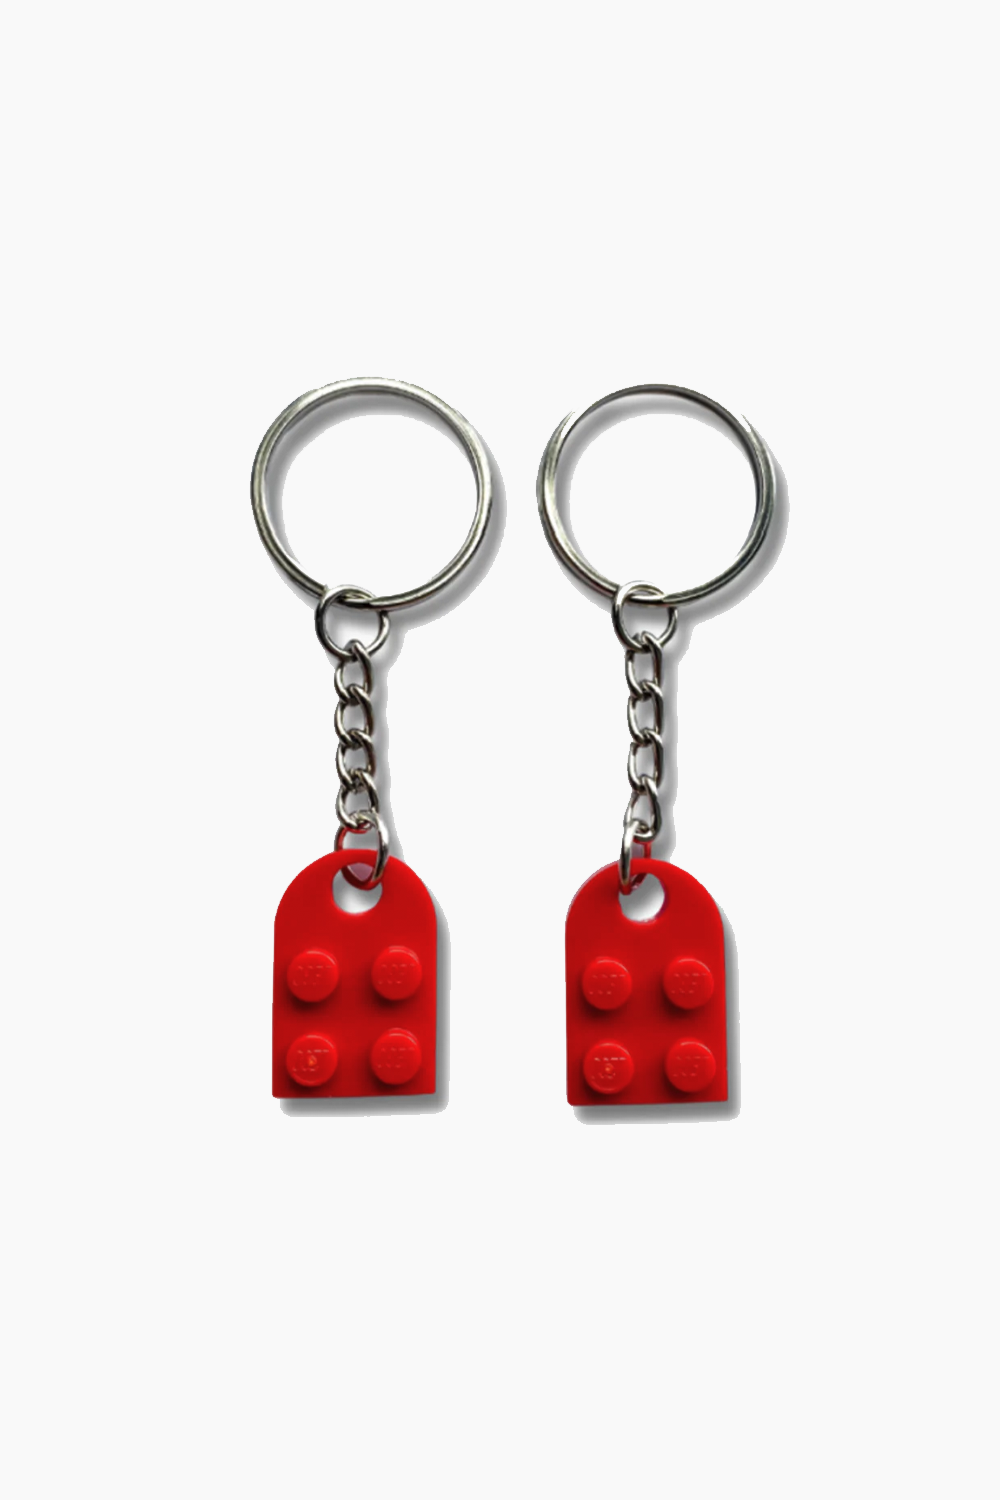 LEGO couple keychain